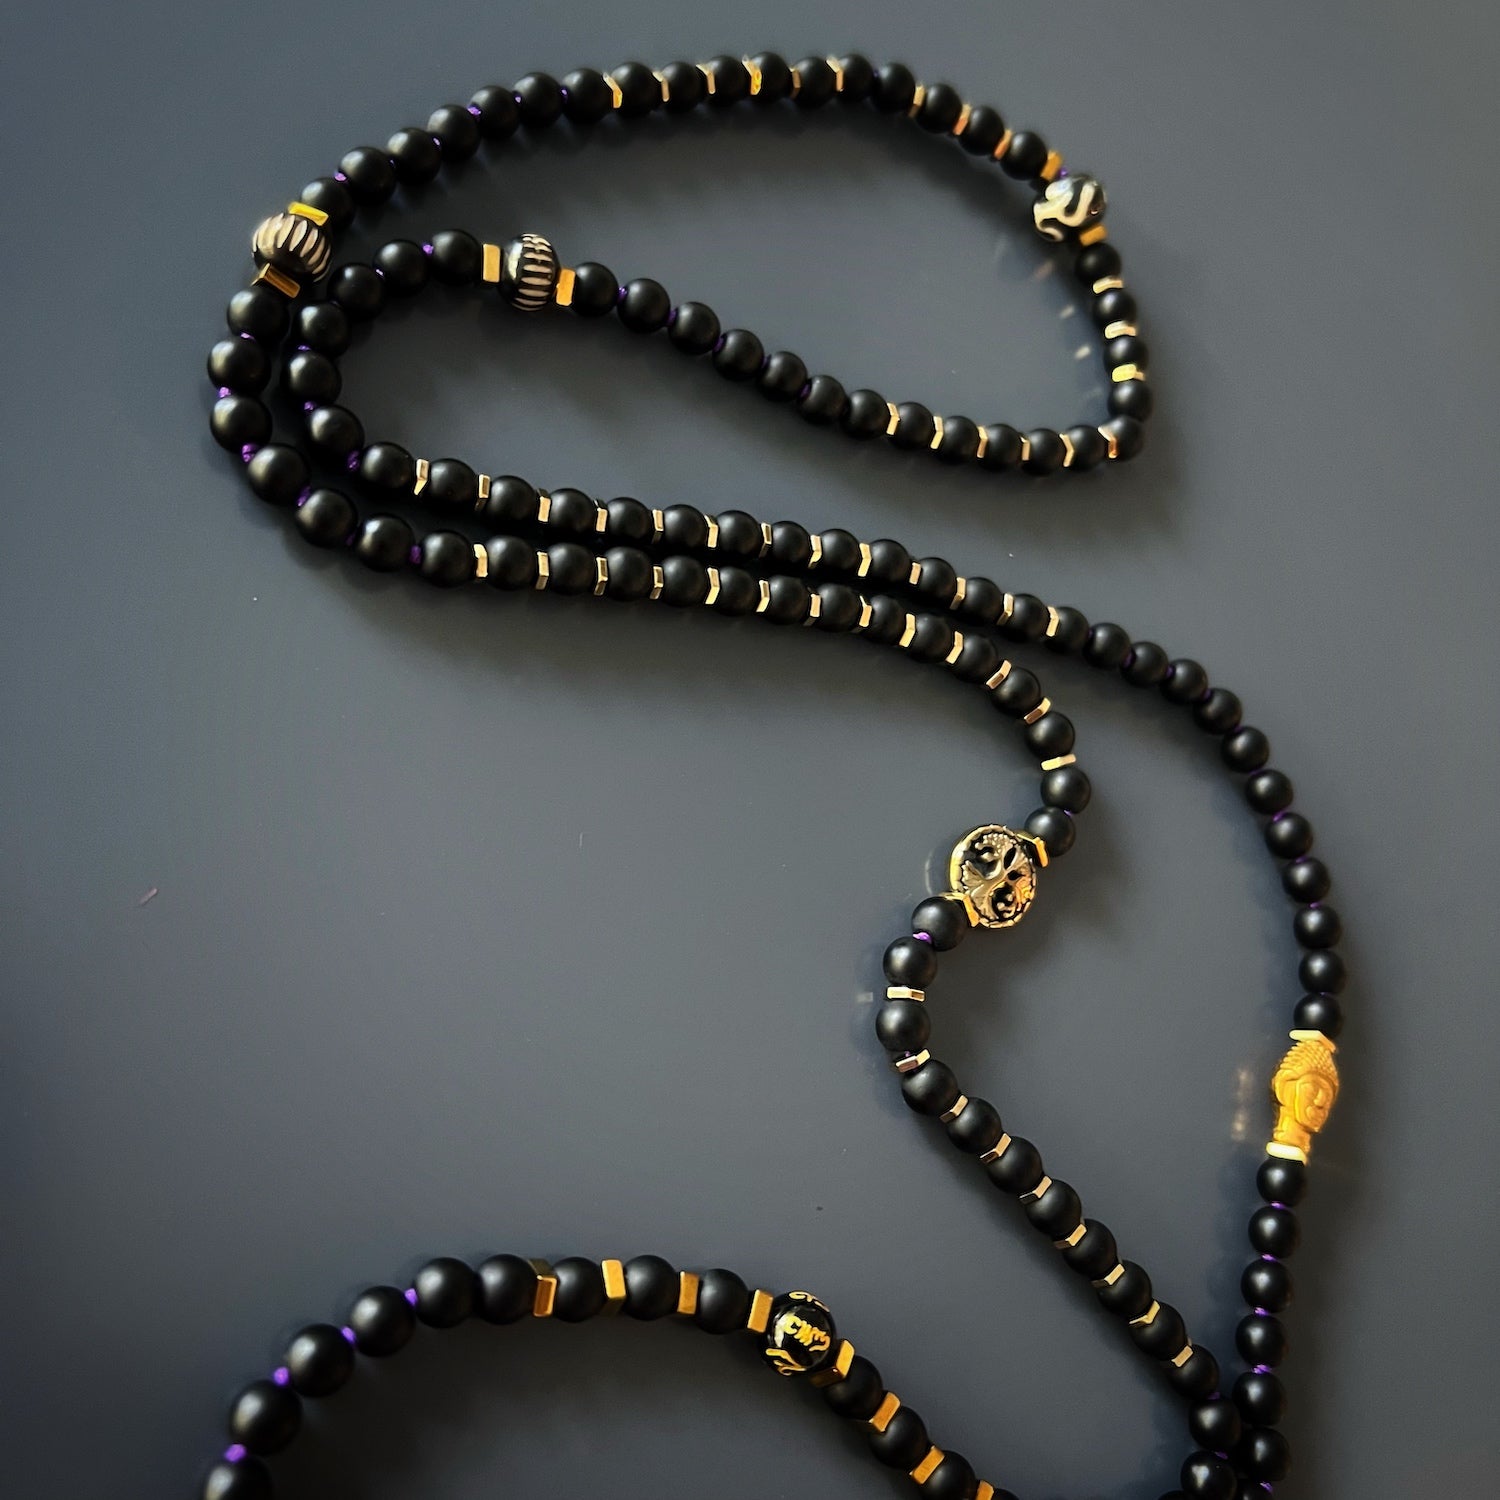 The gold color Buddha shape hematite stone beads in the Spiritual Yoga Mala Onyx Necklace